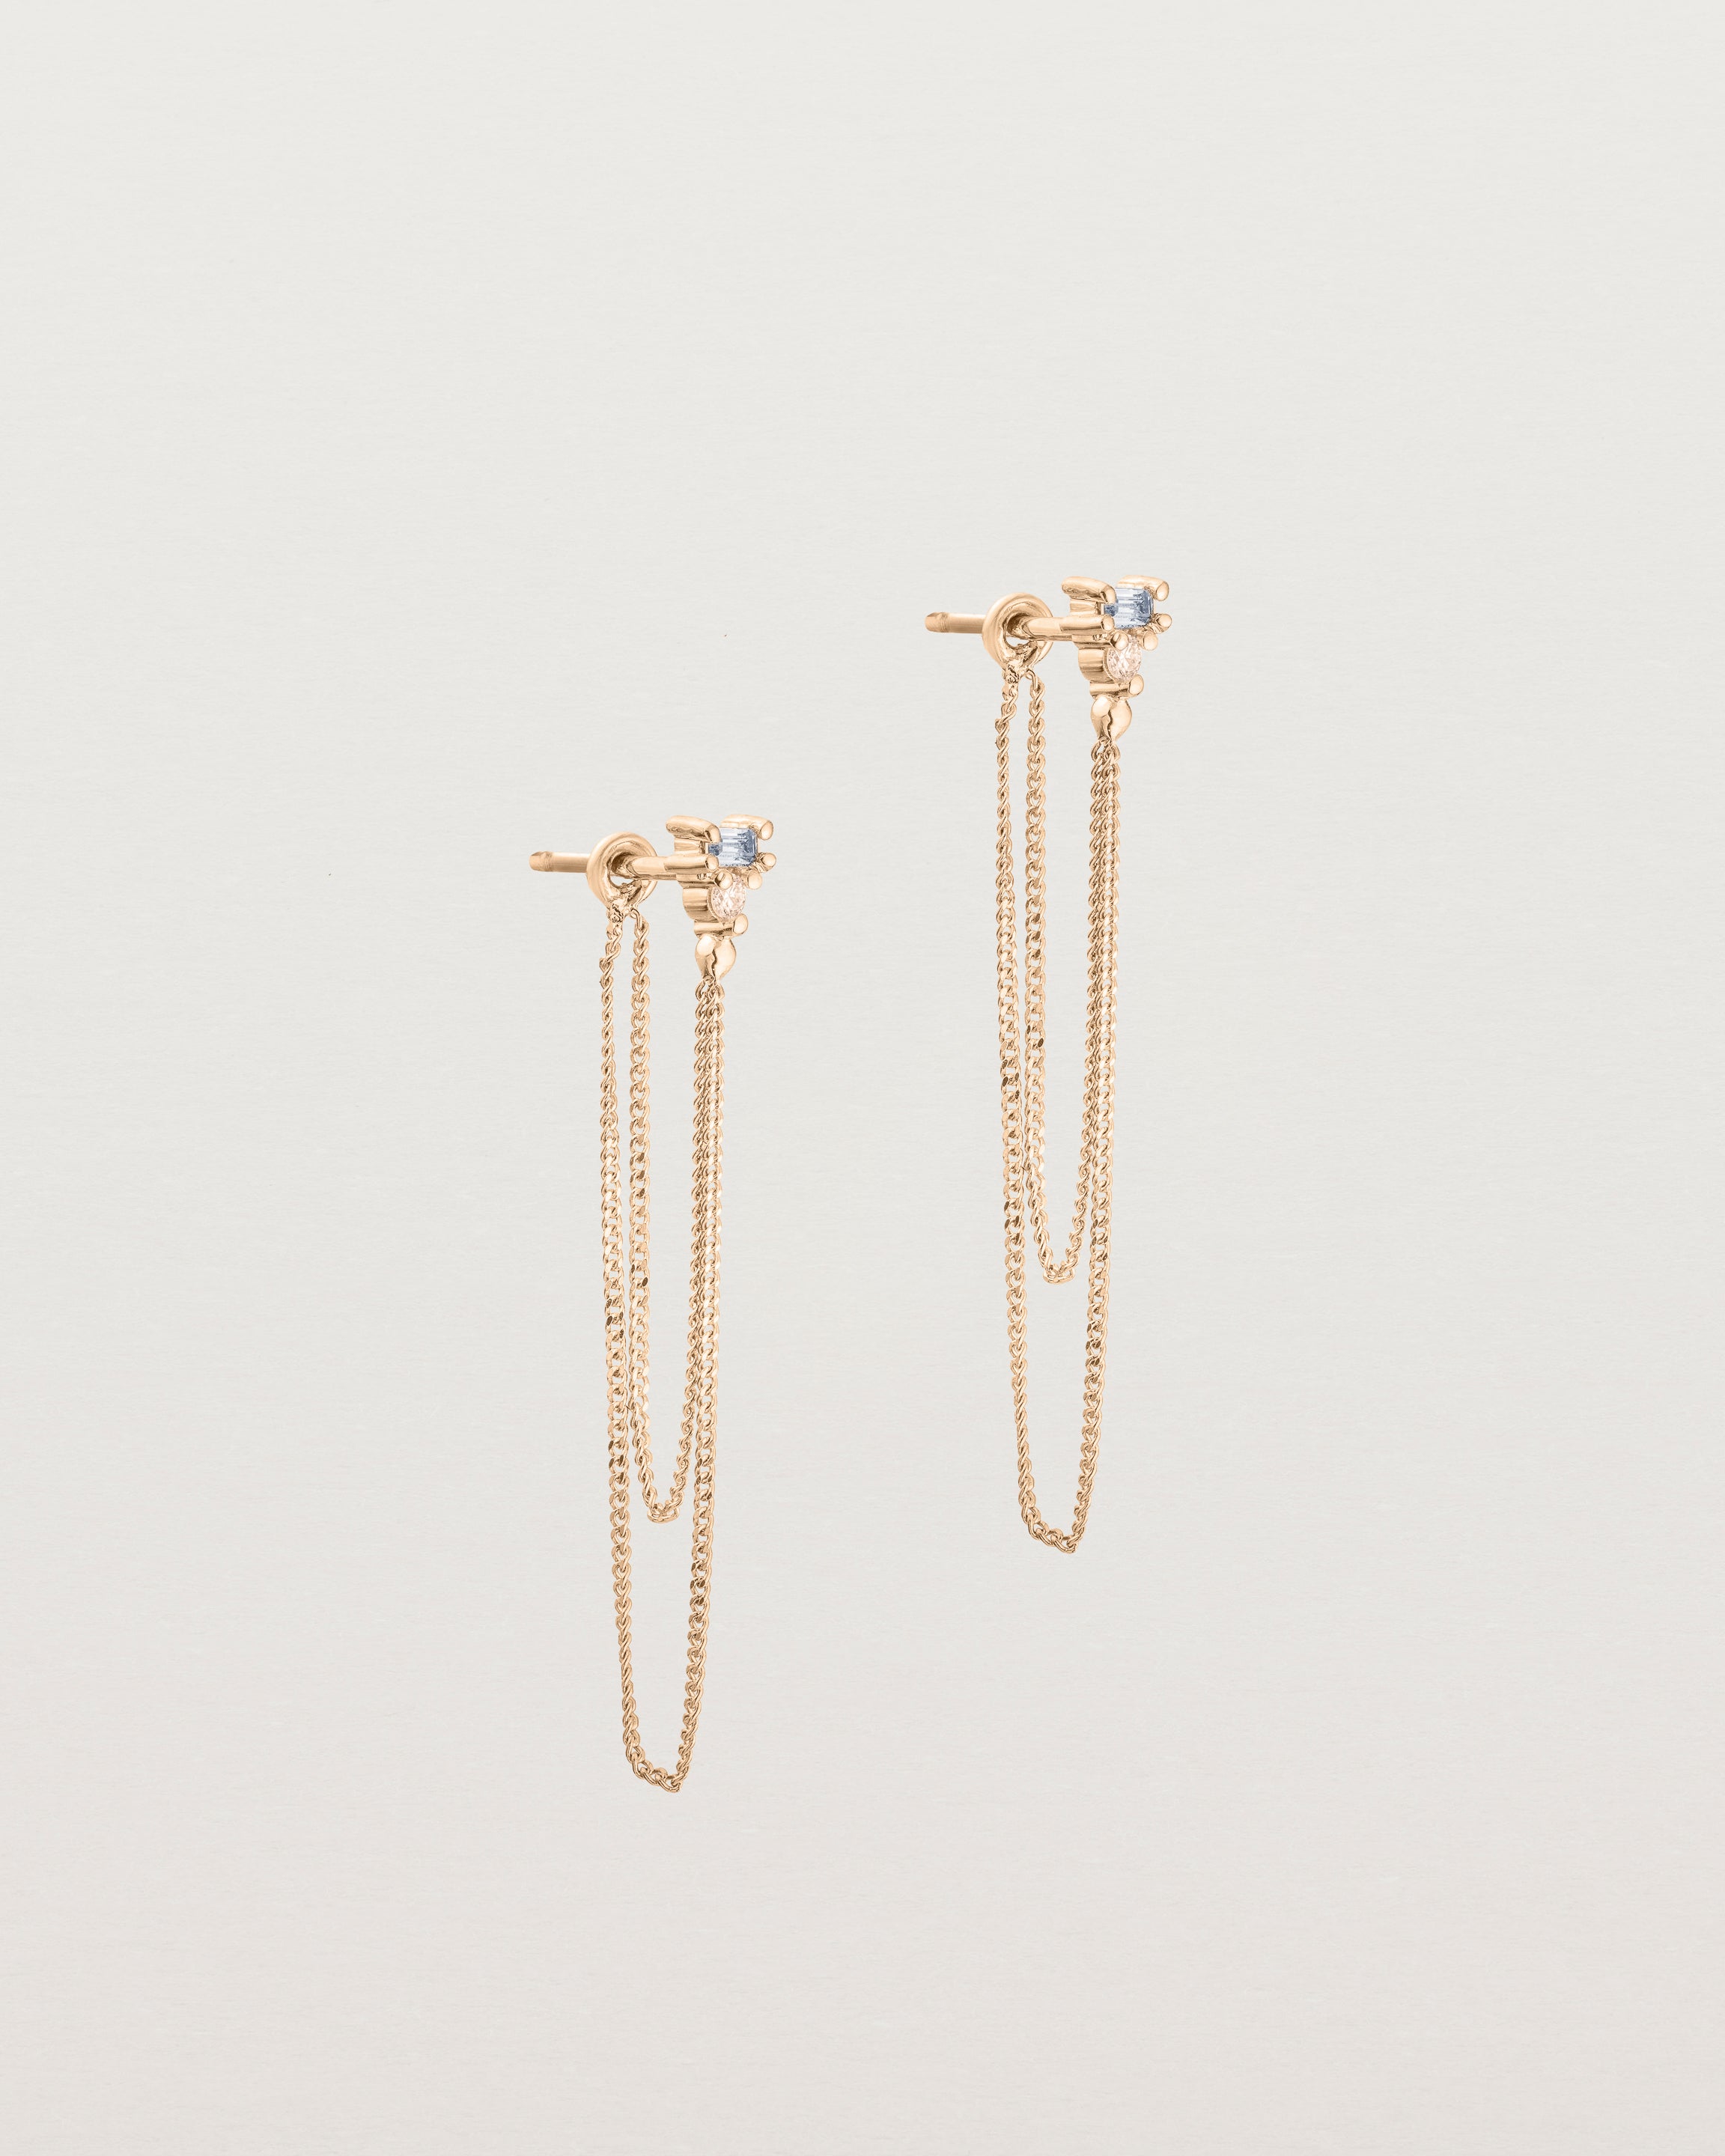 A pair of Sena Loop Studs | Sapphire & Diamond | Rose Gold.